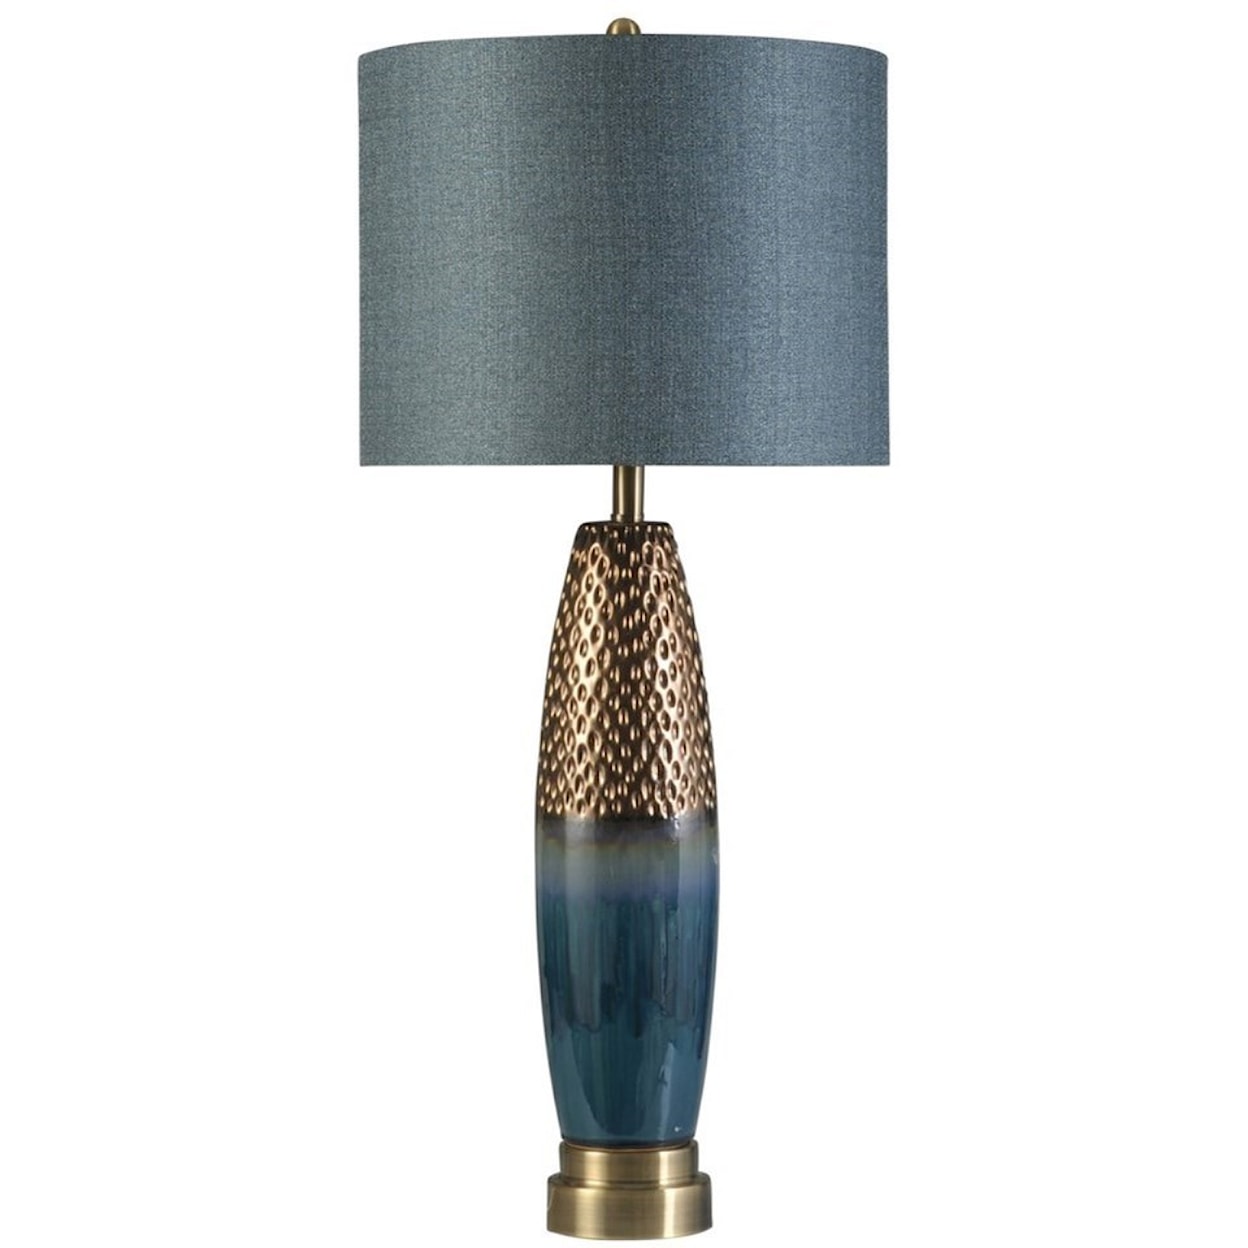 StyleCraft Lamps Bedford Glazed Ceramic Lamp